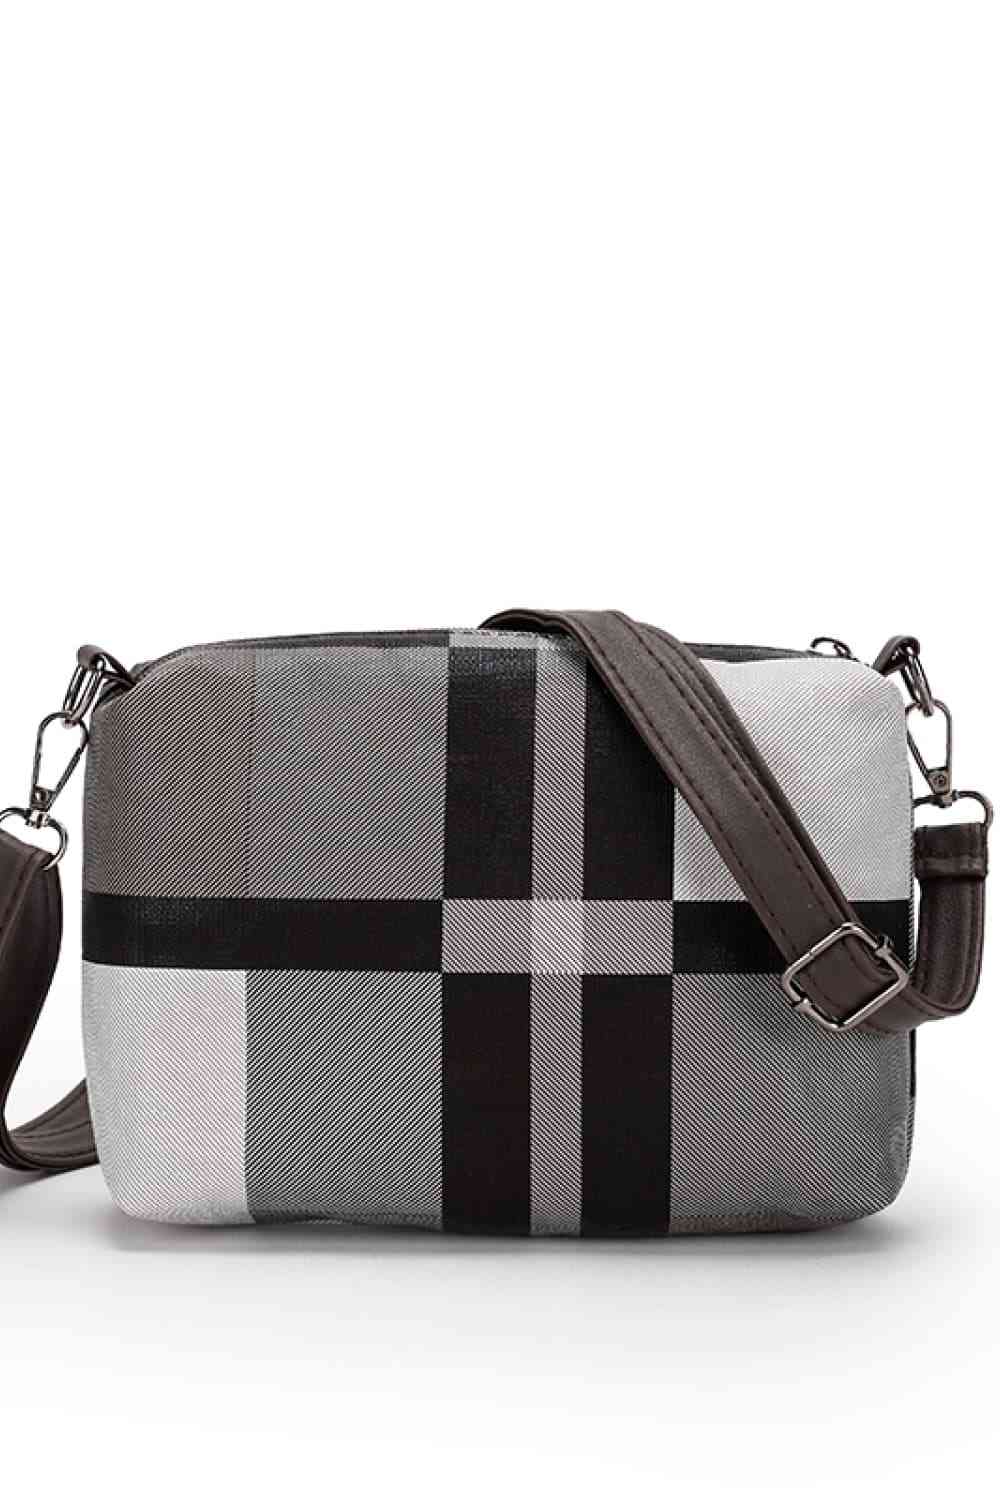 TEEK - 4-Piece Color Block Bag Set SET TEEK Trend   